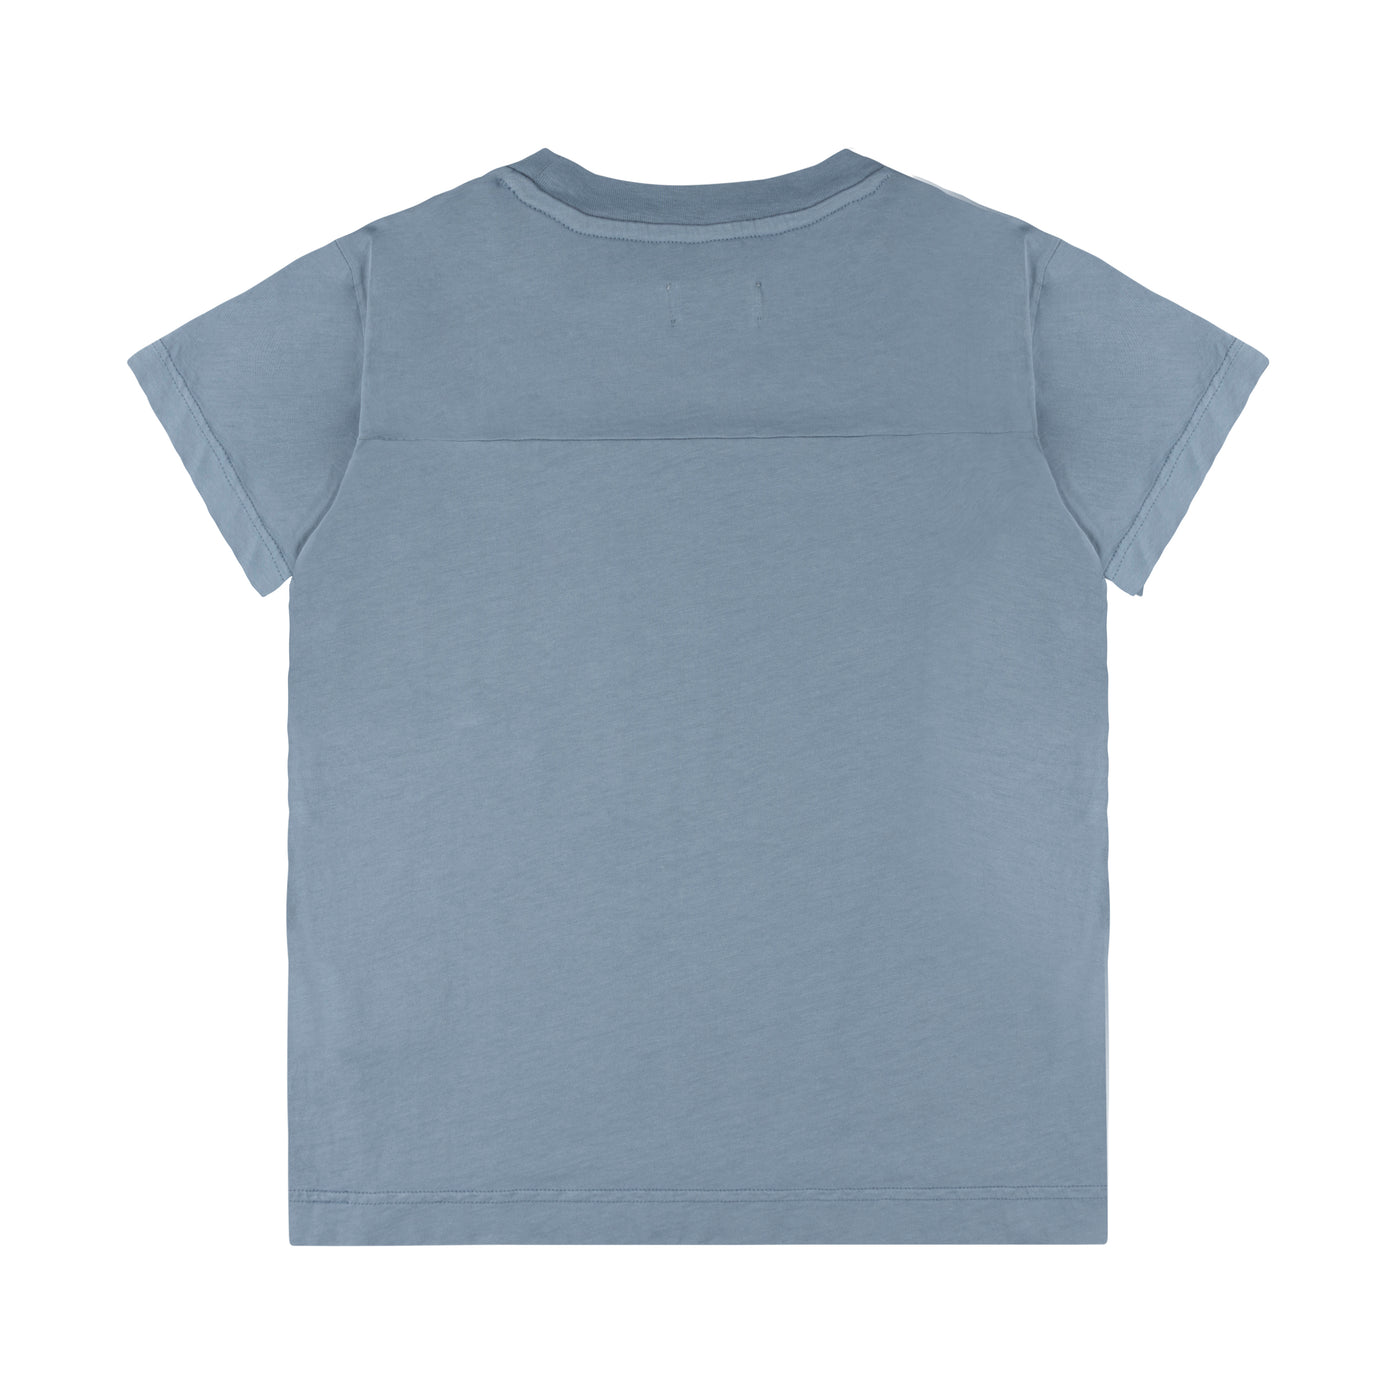 tee shirt - night fog blue